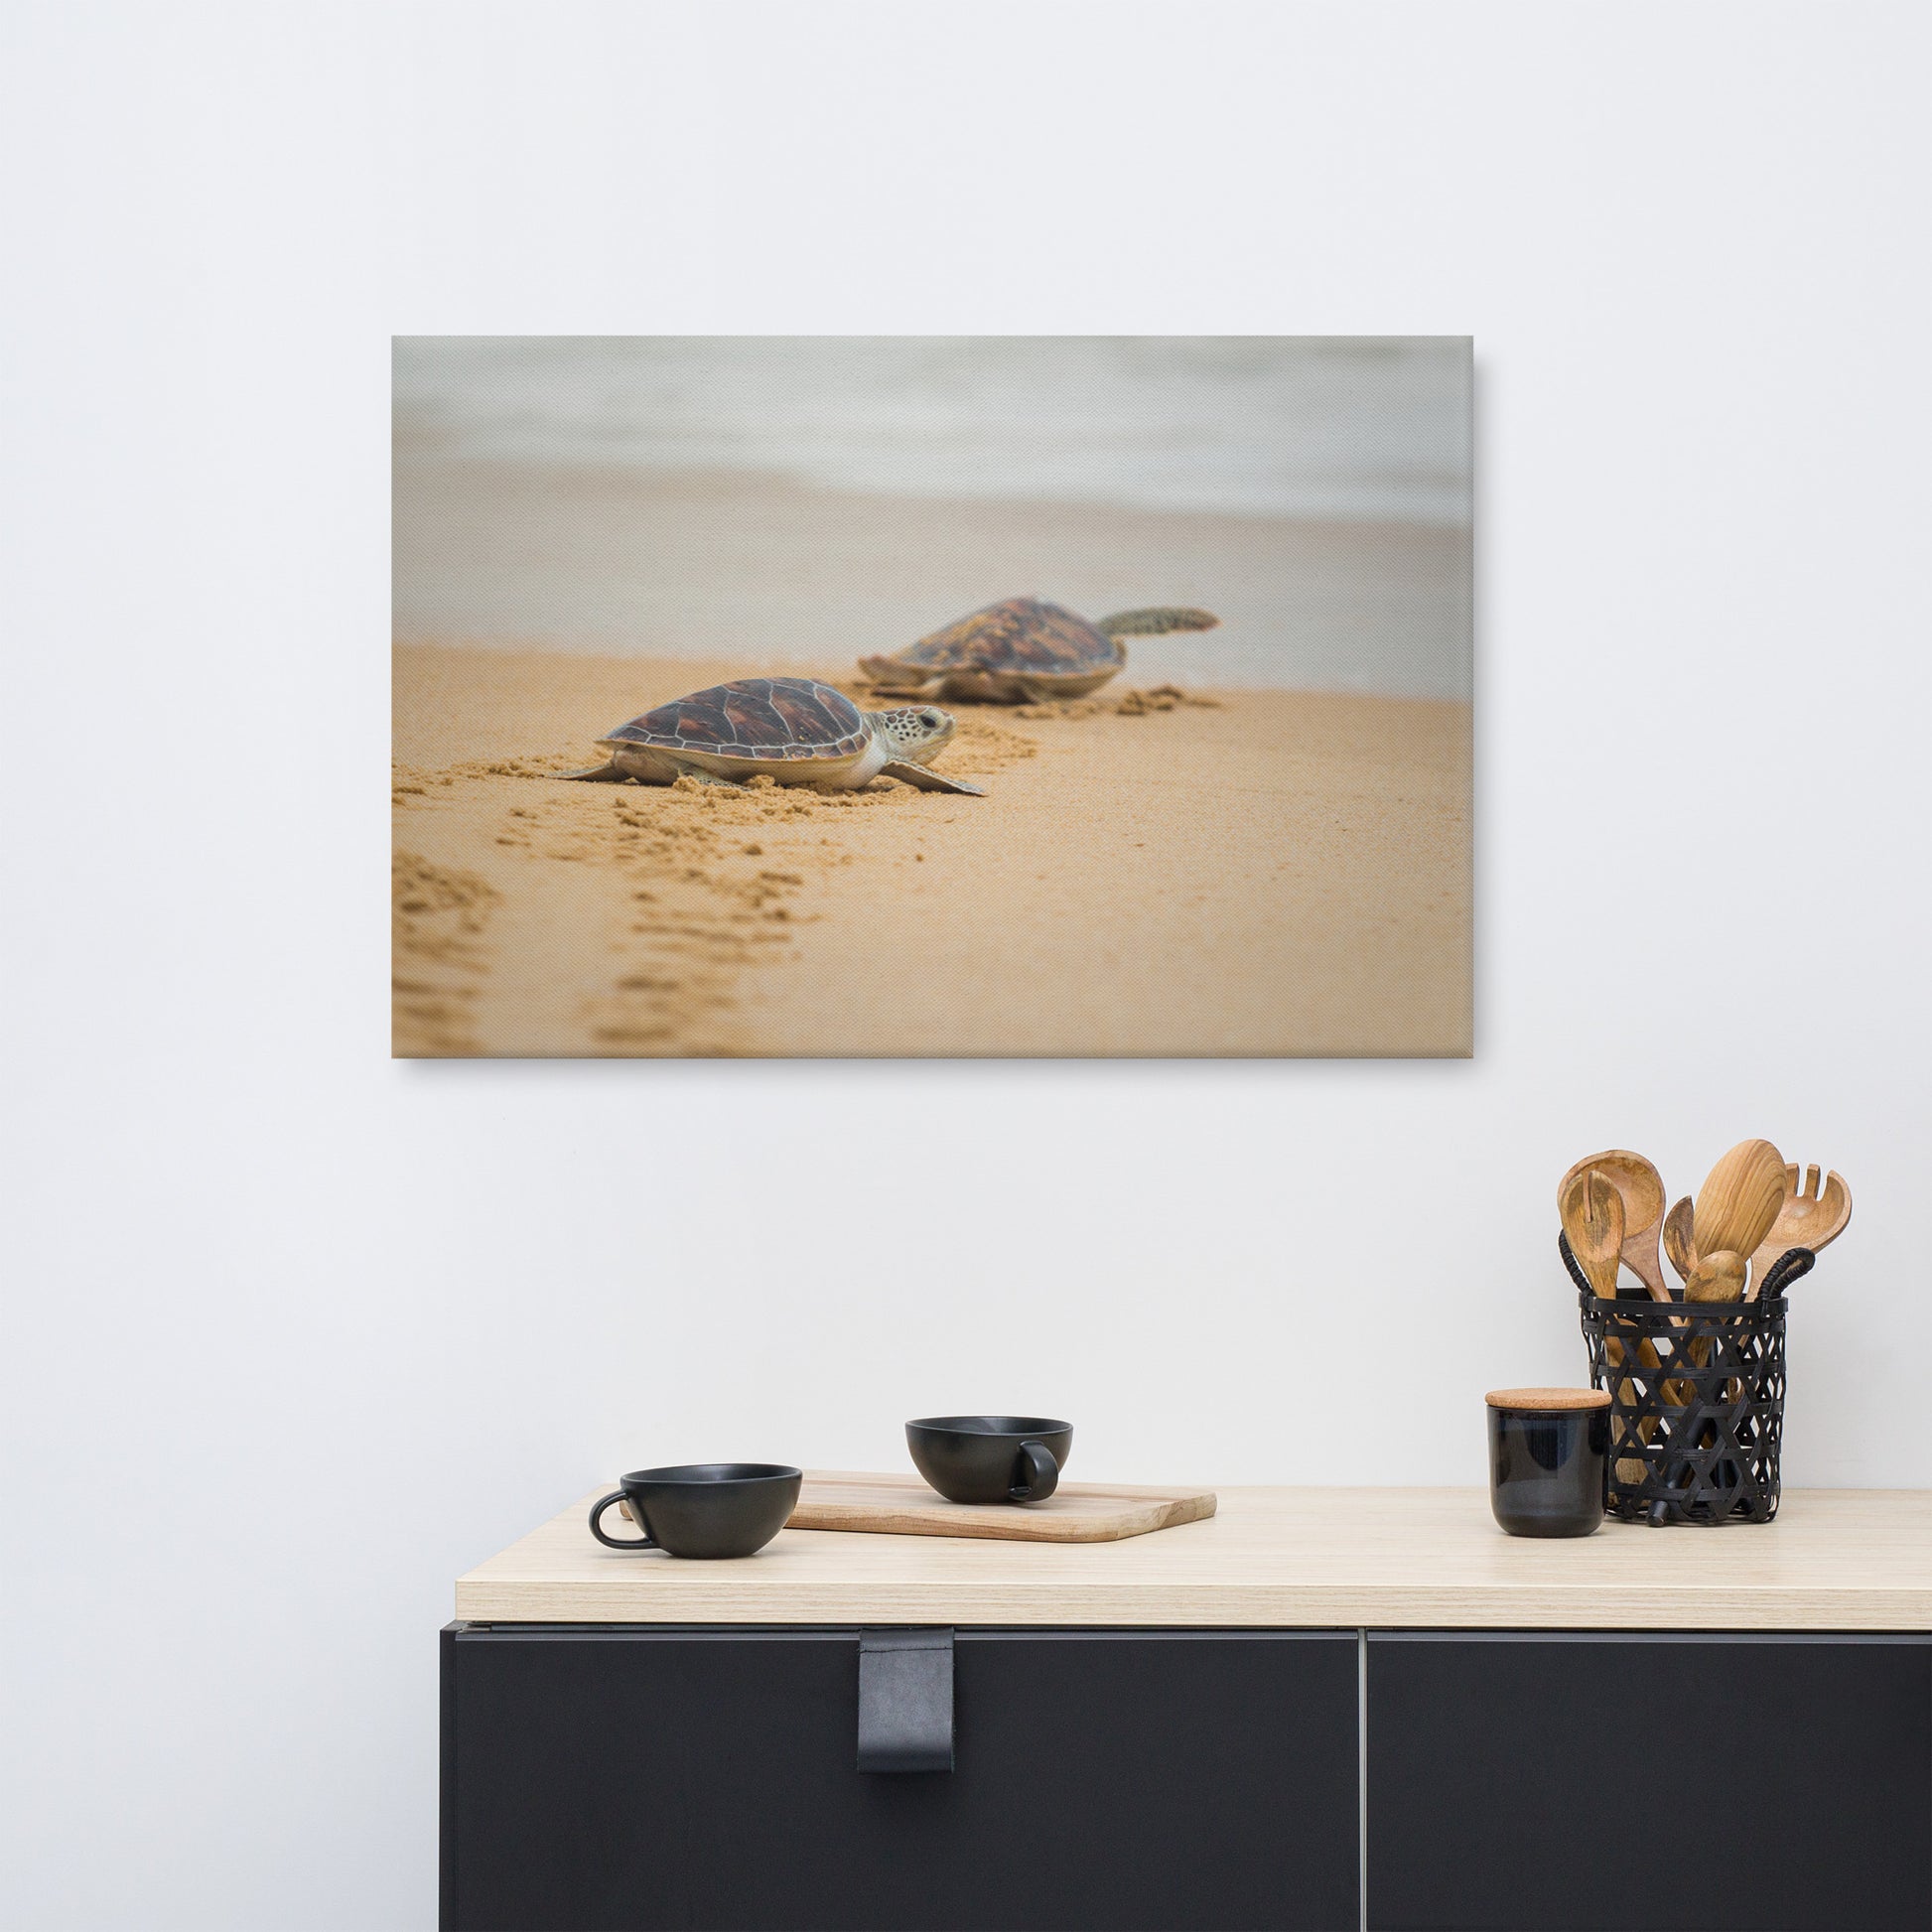 Dining Room Large Wall Decor: Hawksbill Sea Turtle Hatchlings at the Shore - Coastal / Wildlife / Marine Animal / Nature Photograph Canvas Wall Art Print - Artwork